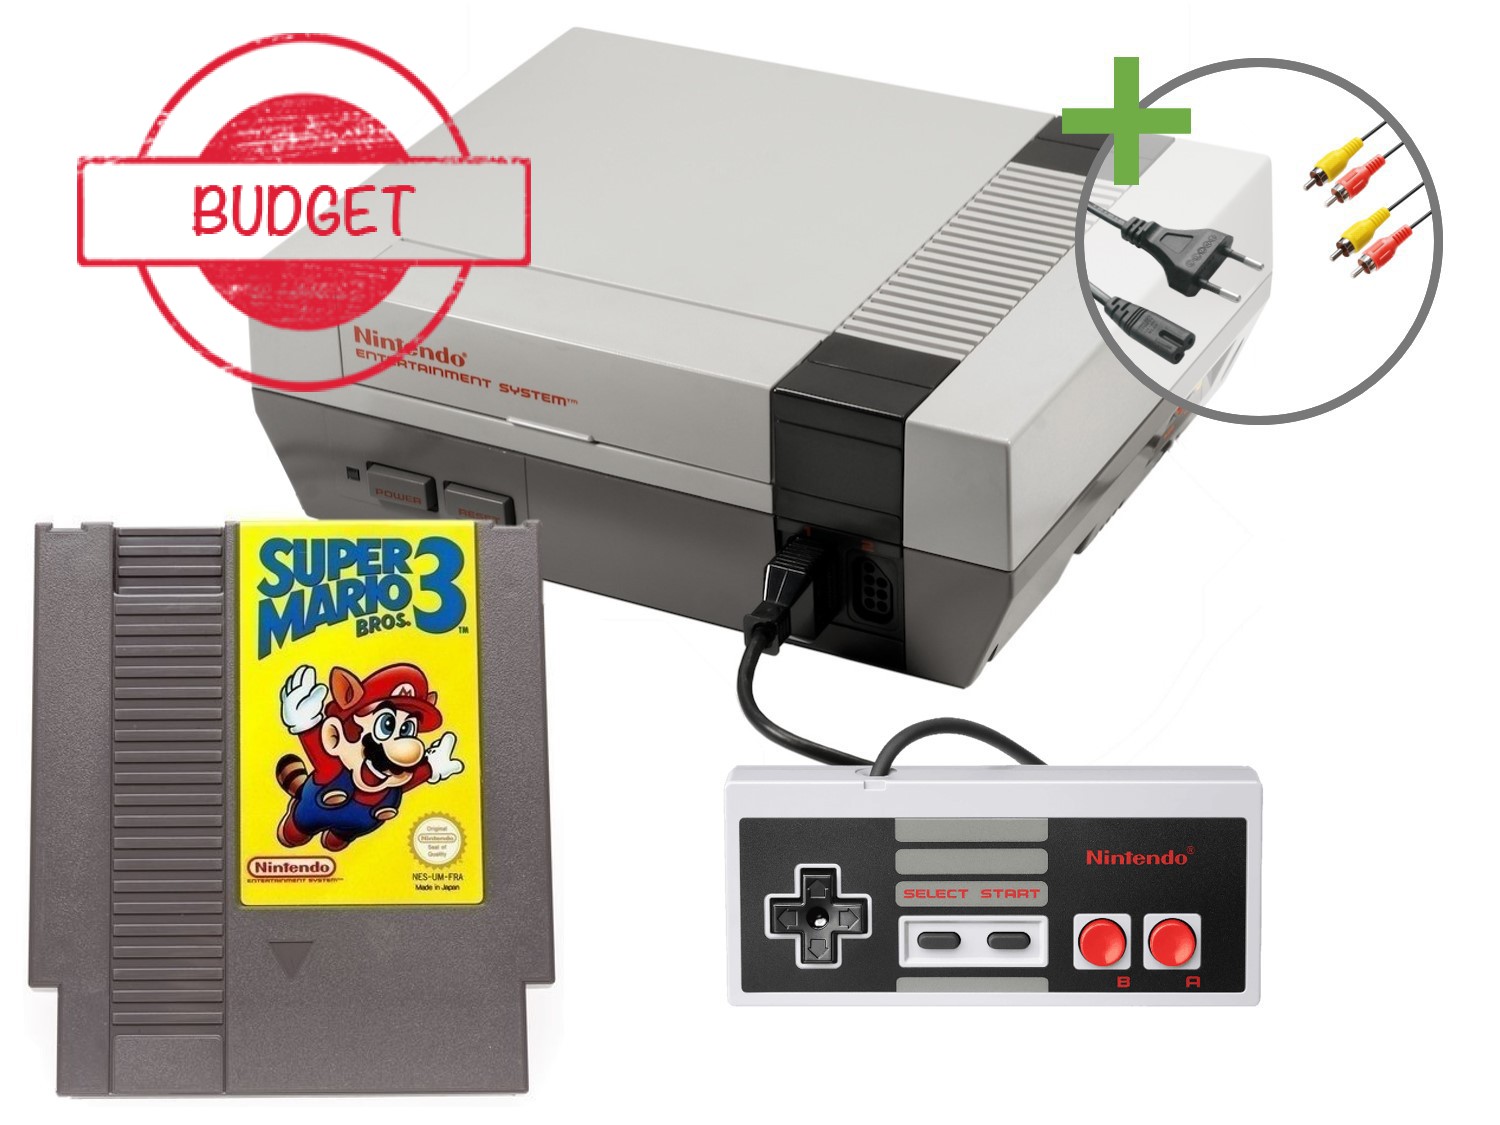 Nintendo NES Starter Pack - Super Mario Bros. 3 Control Deck Edition - Budget - Nintendo NES Hardware